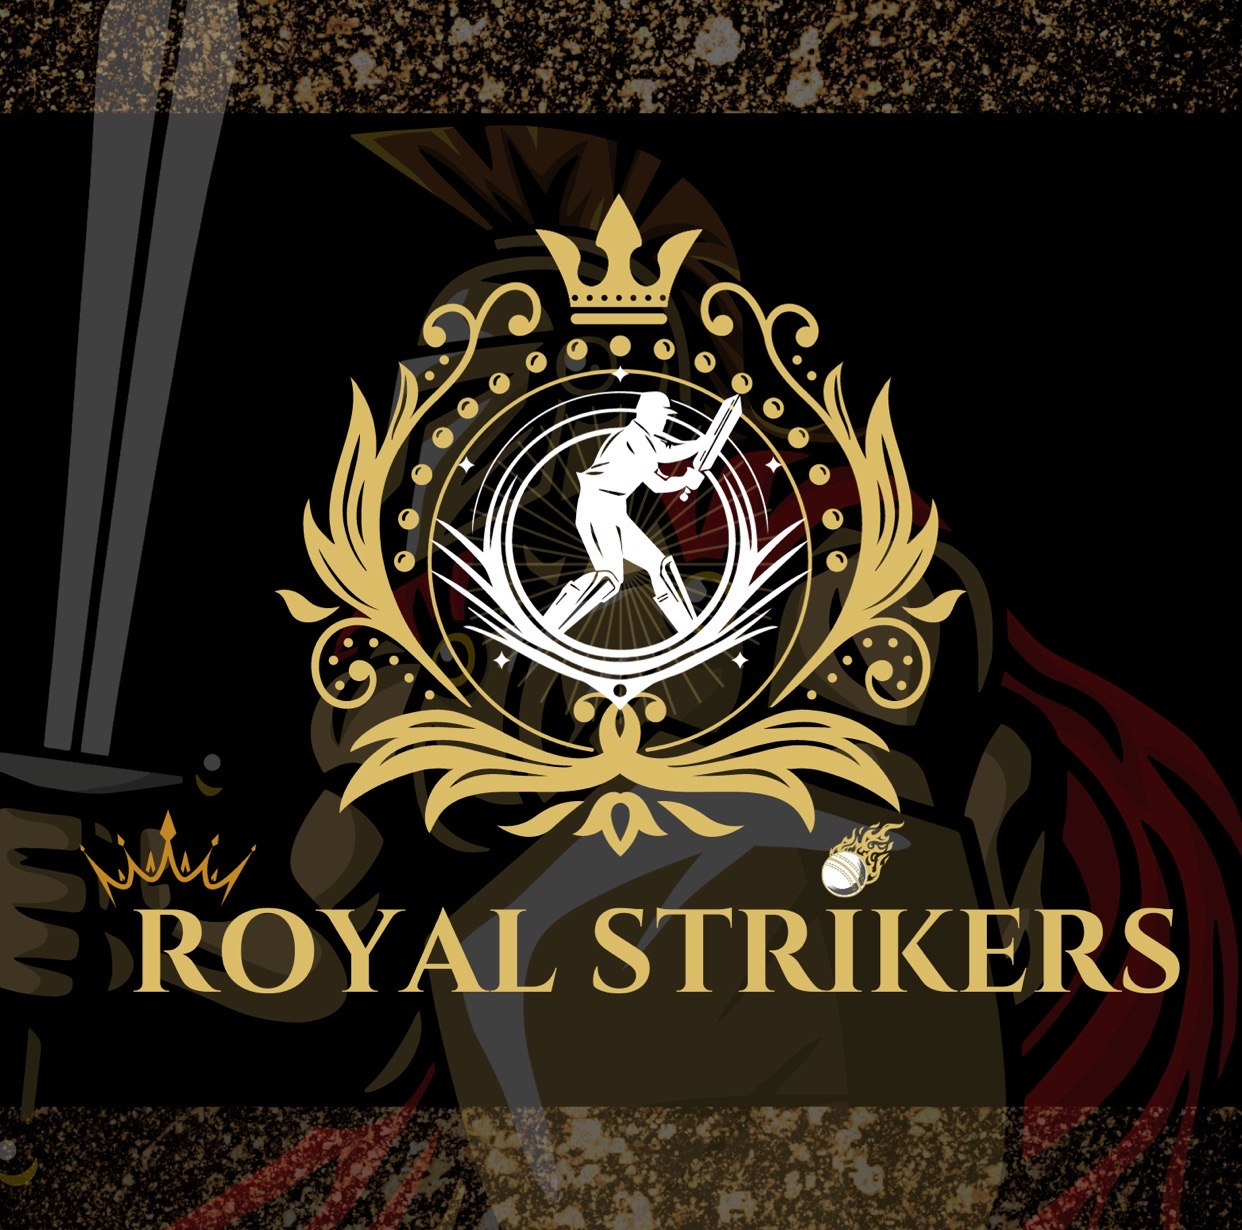 Royal Strikers